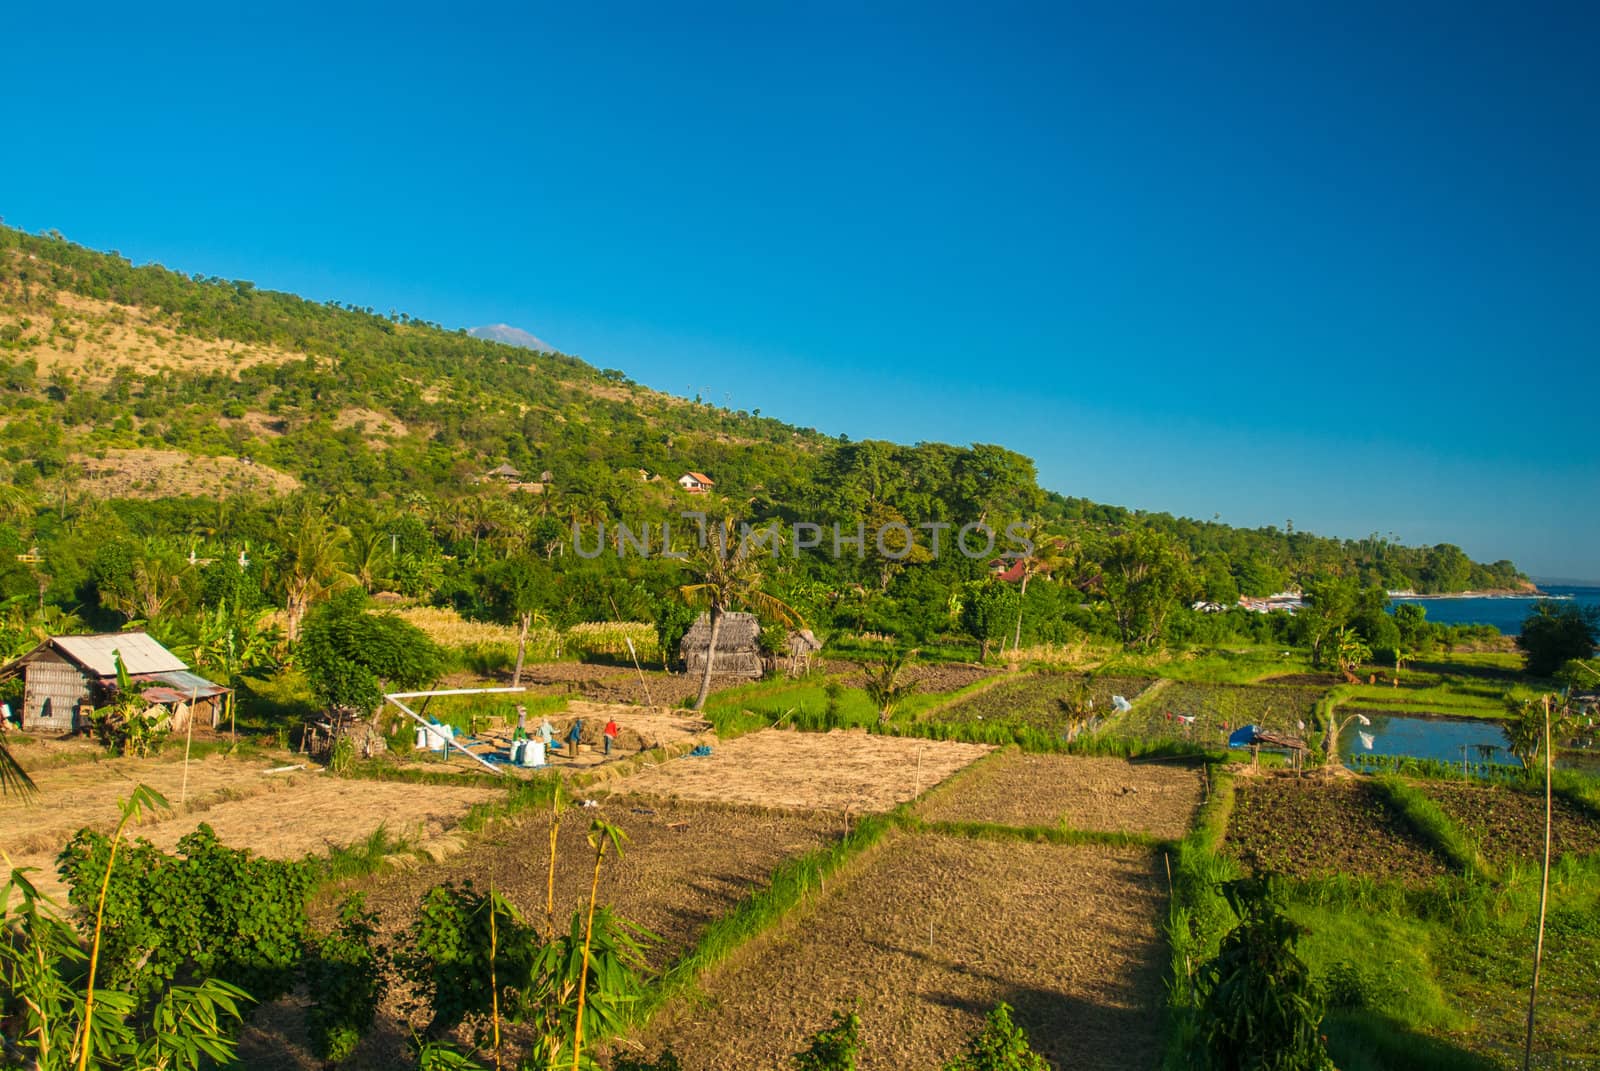 Fields in the Bali countryside by edan